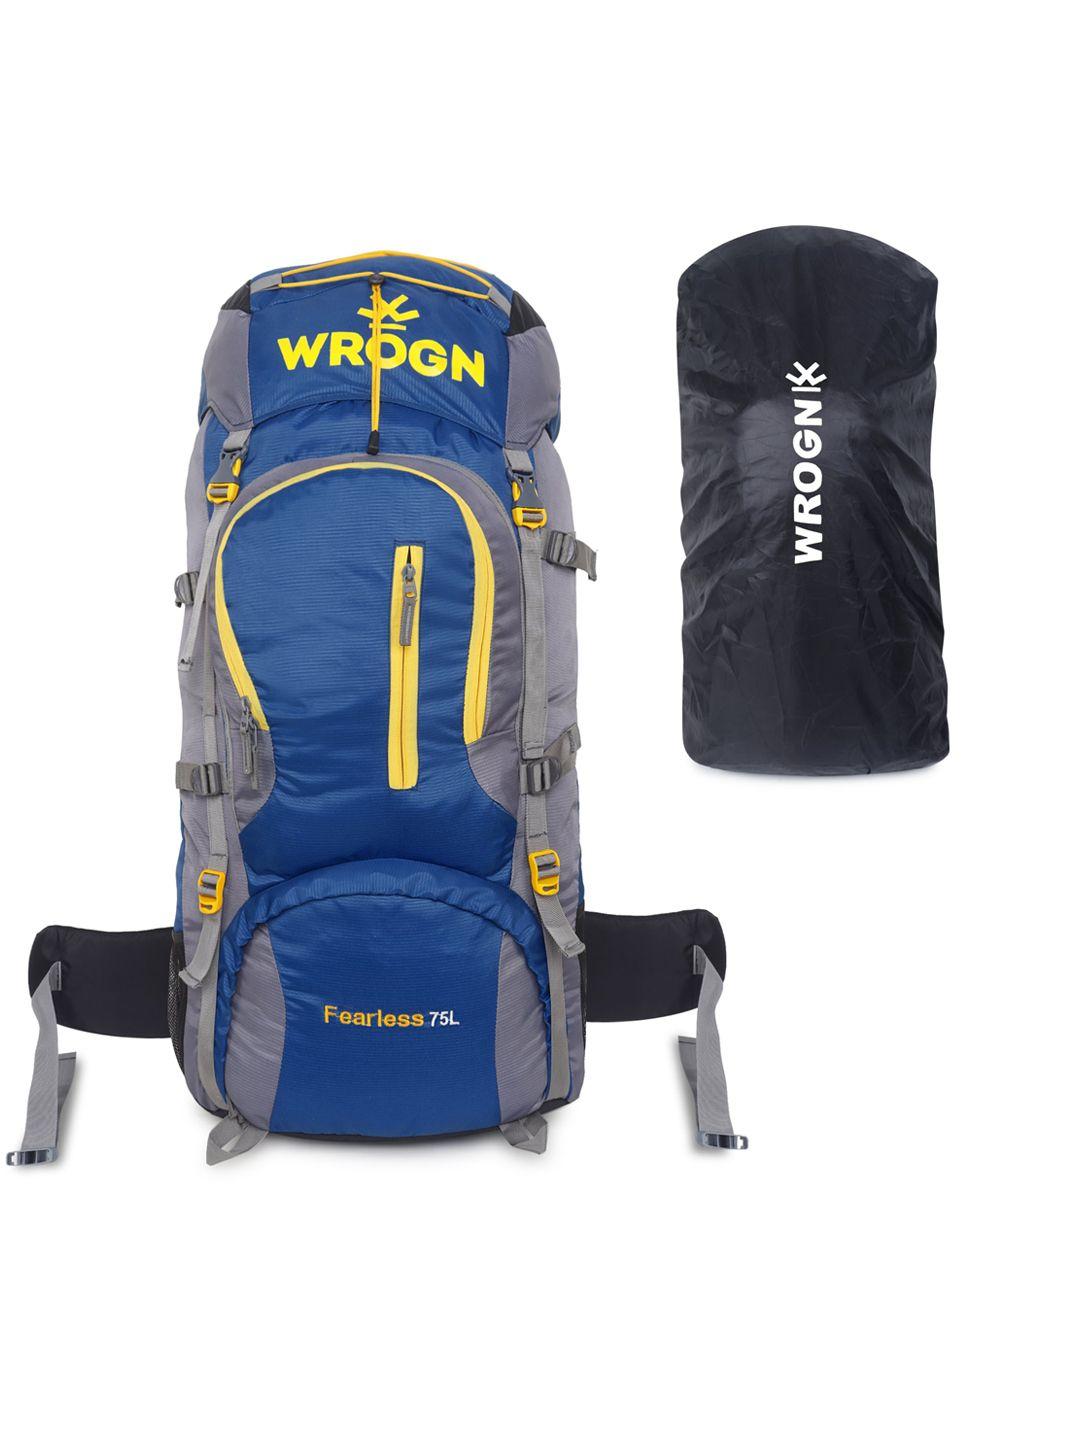 wrogn logo printed waterproof rucksacks with rain cover